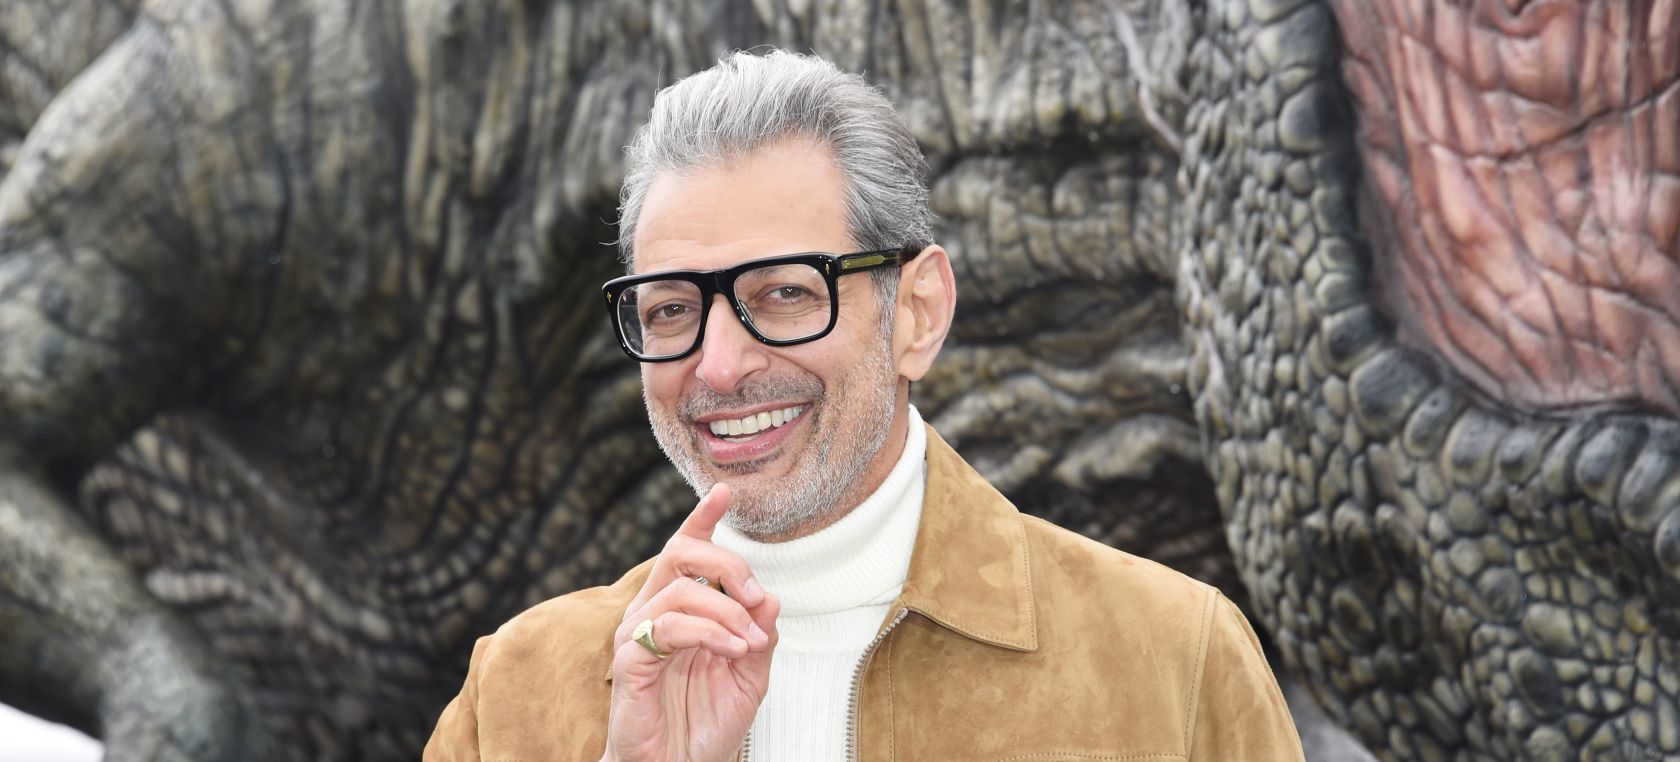 Jeff Goldblum recrea escena sexy Jurassic Park